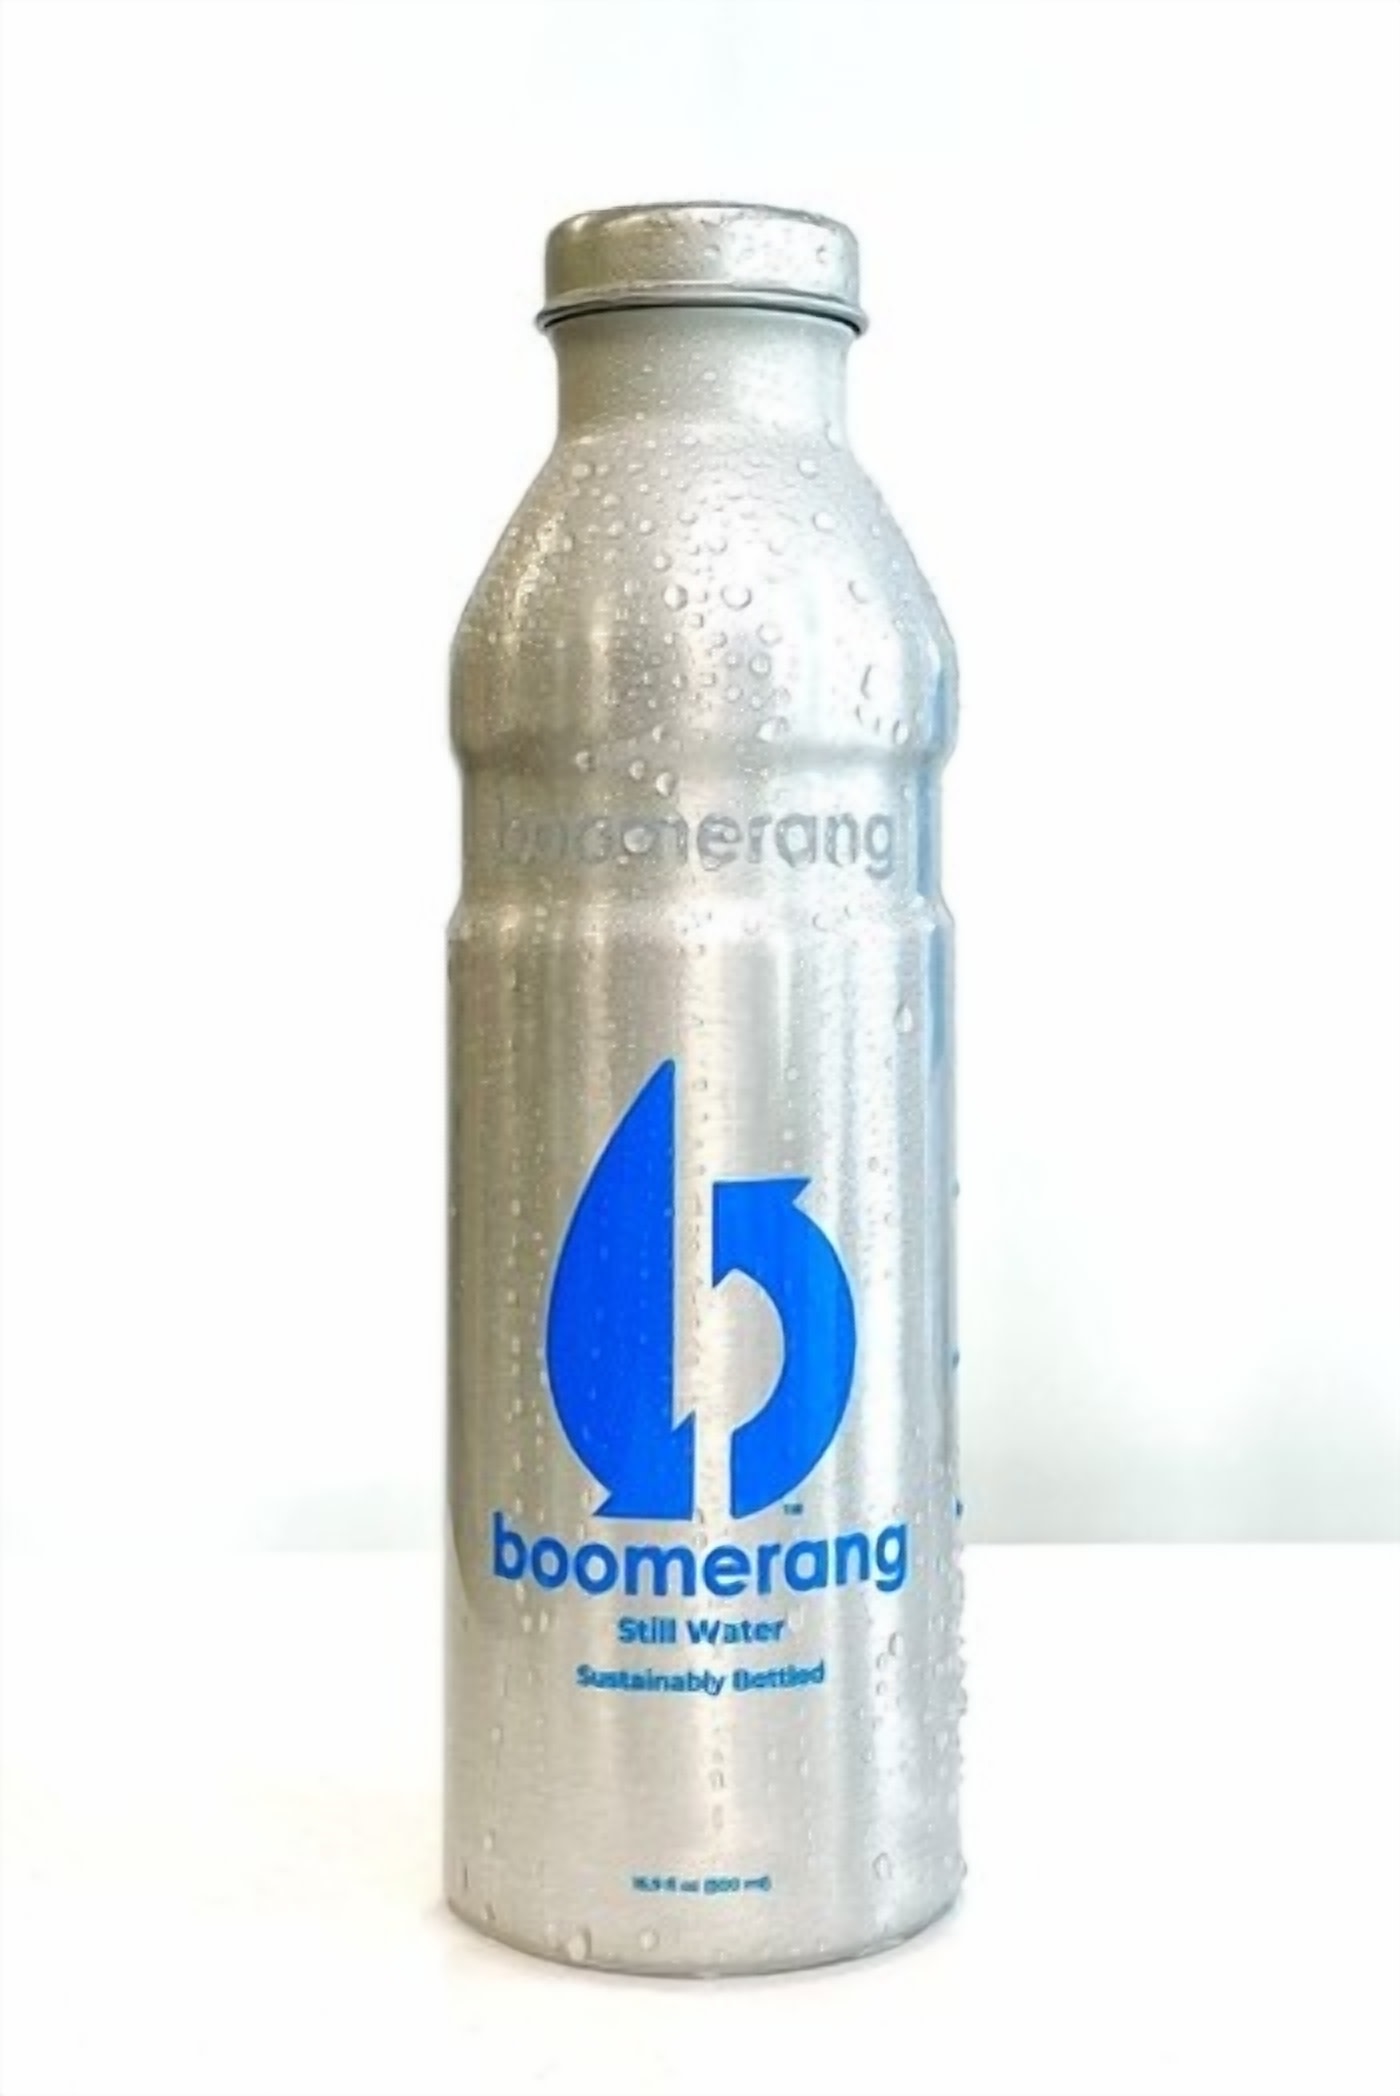 Ball Corp. & Boomerang Water Partnership for Customer Sustainability